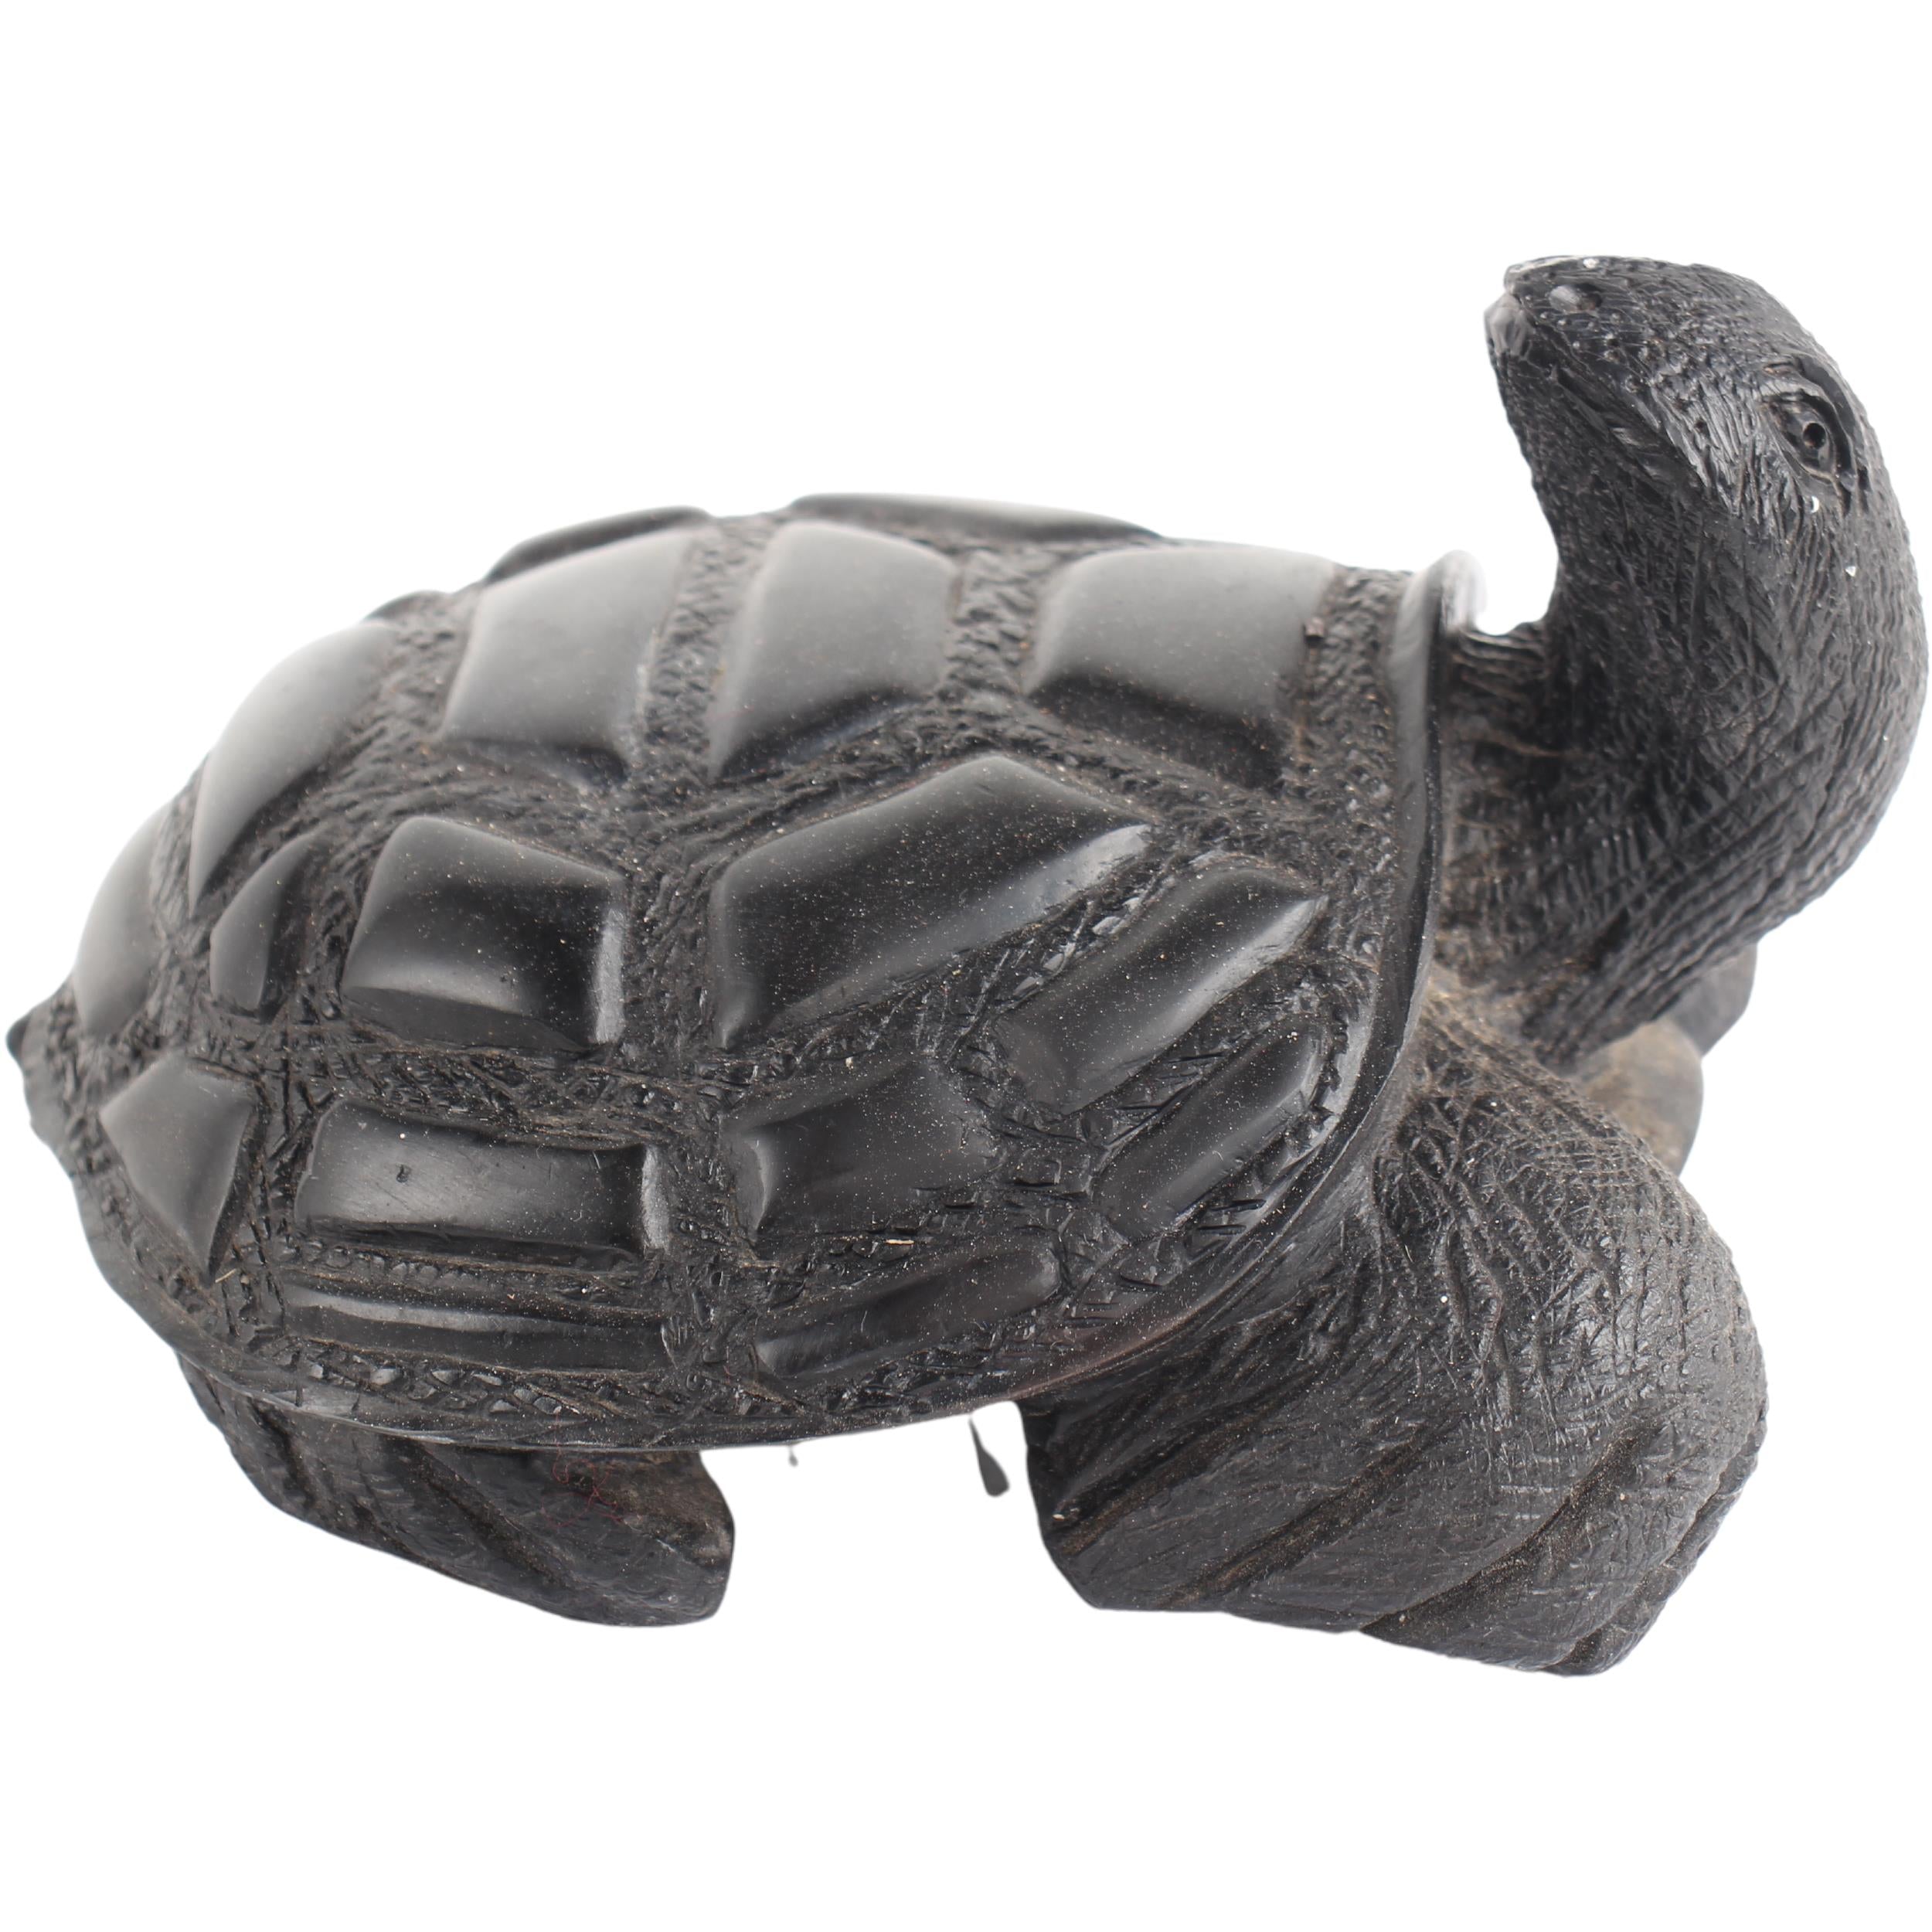 Shona Tribe Serpentine Stone Tortoise ~5.5" Tall - Tortoise